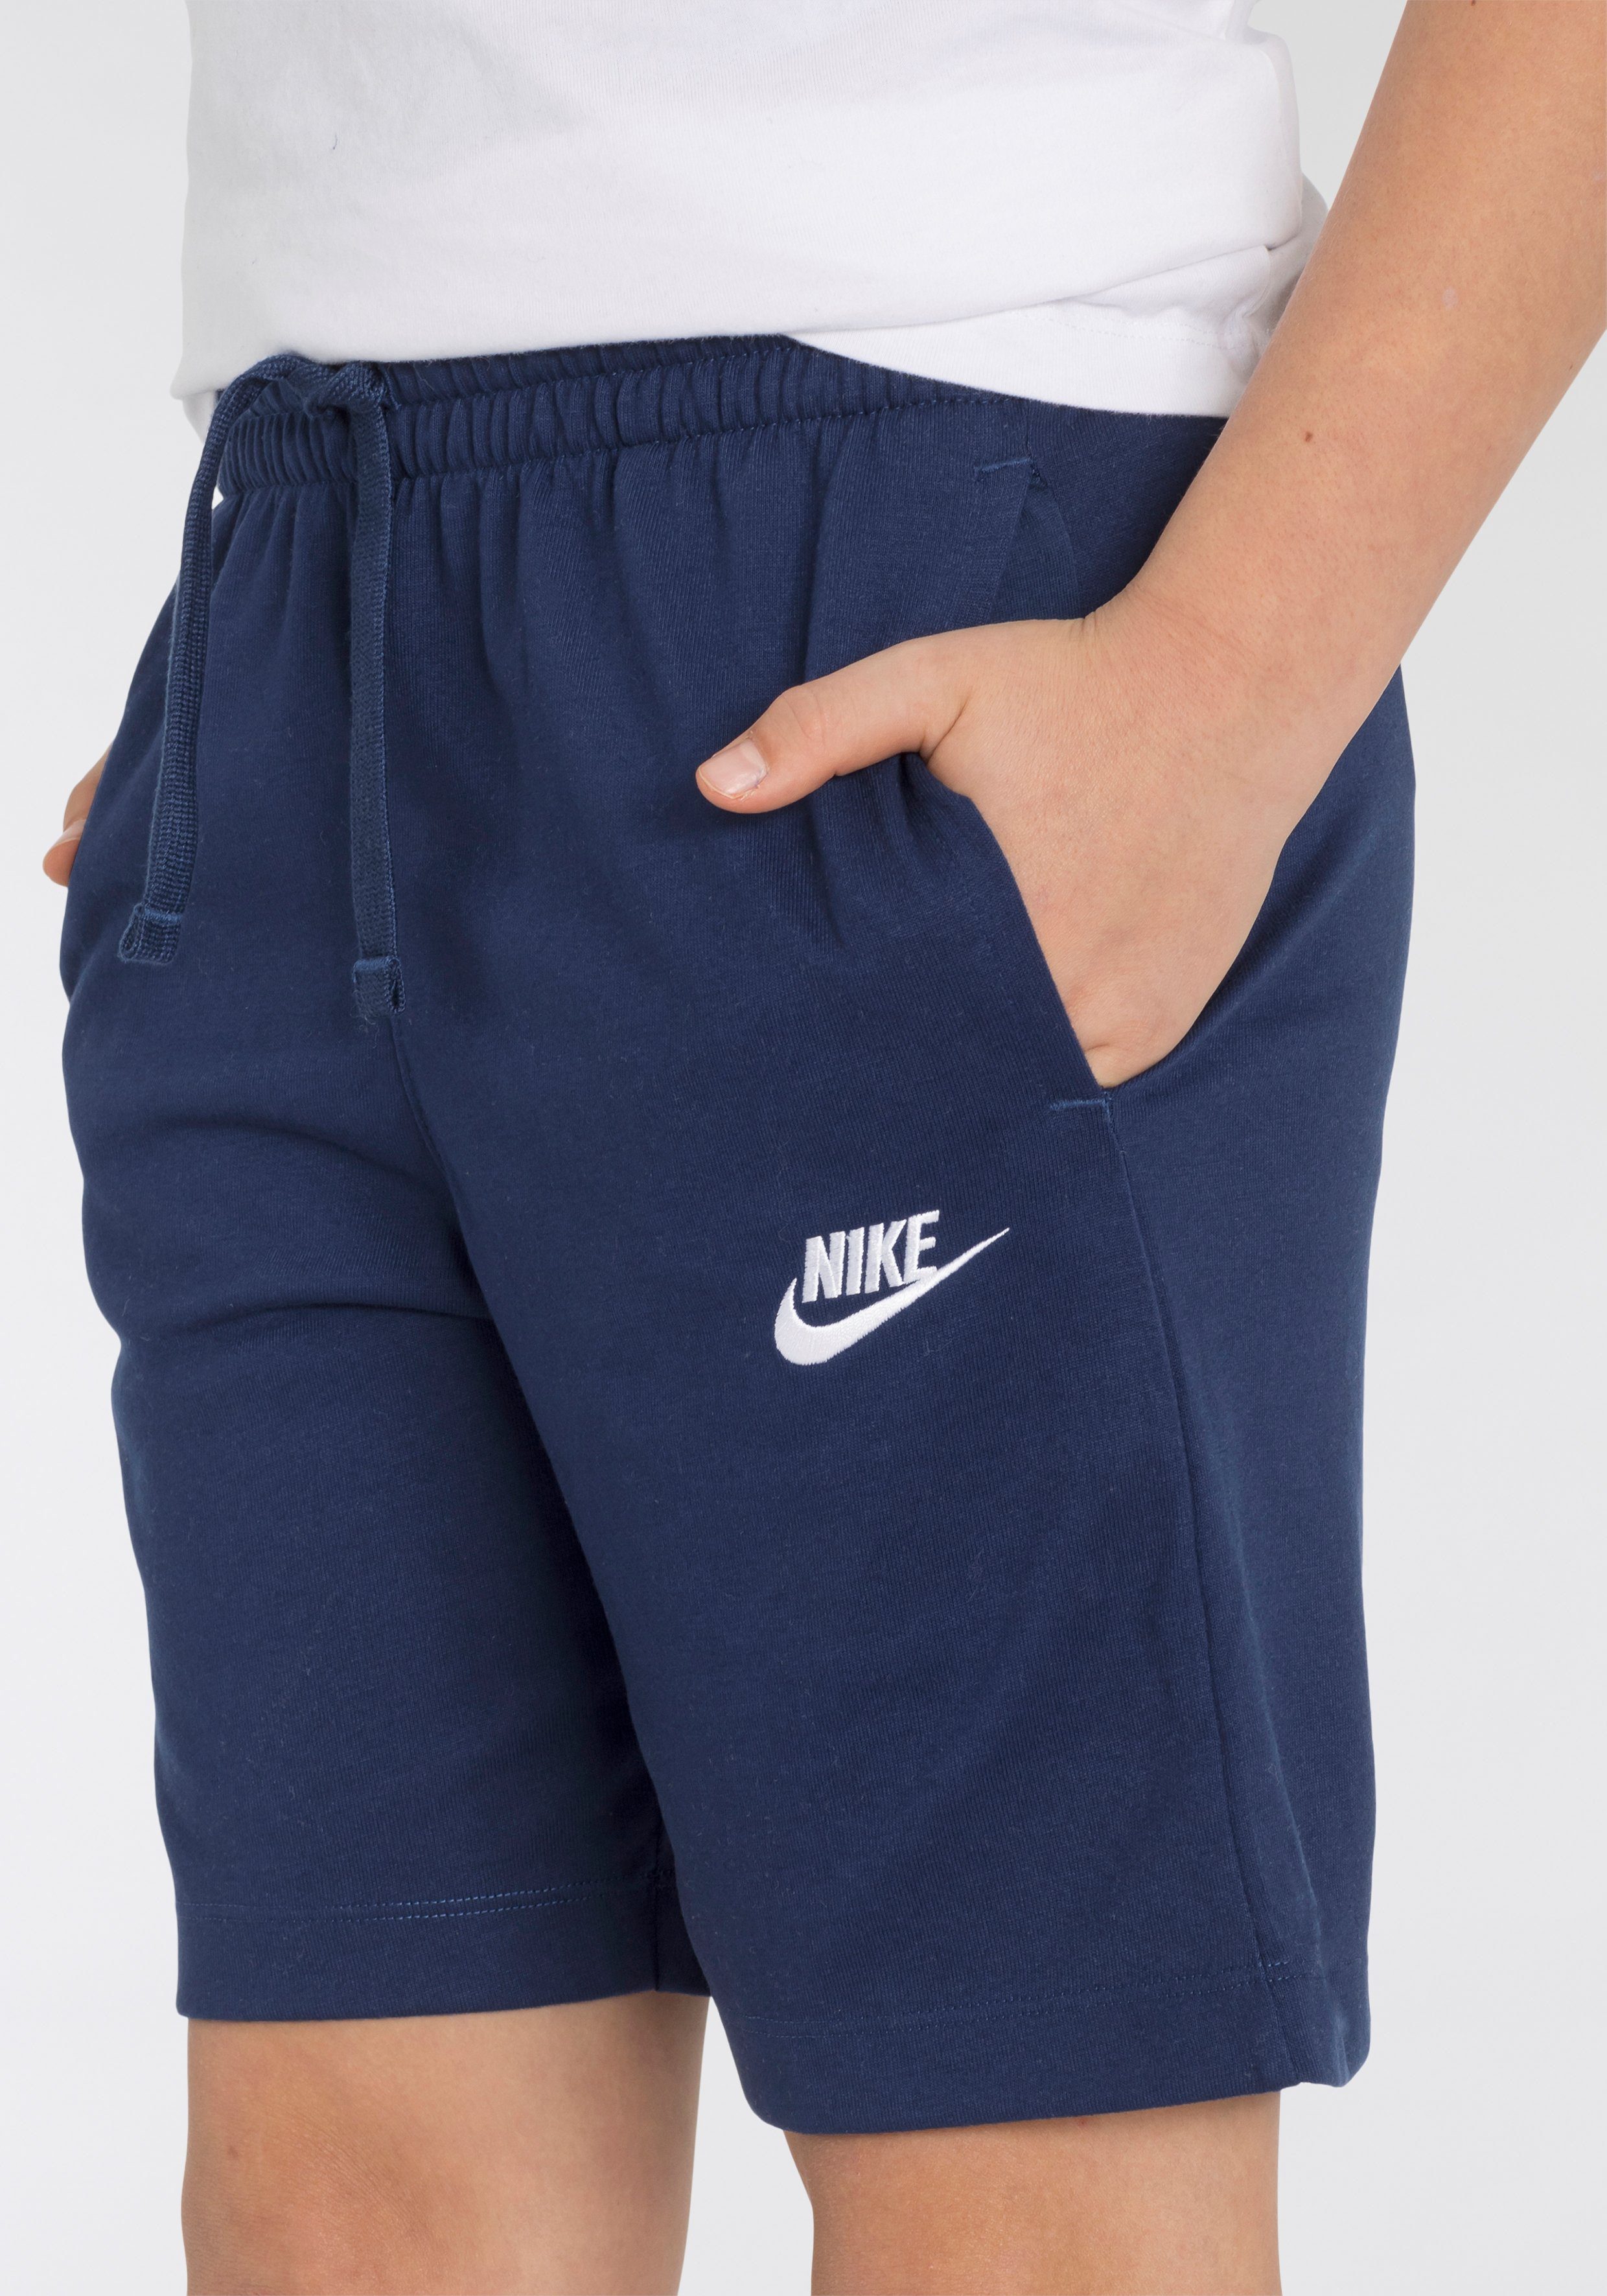 SHORTS JERSEY BIG (BOYS) KIDS' Sportswear Shorts dunkelblau Nike